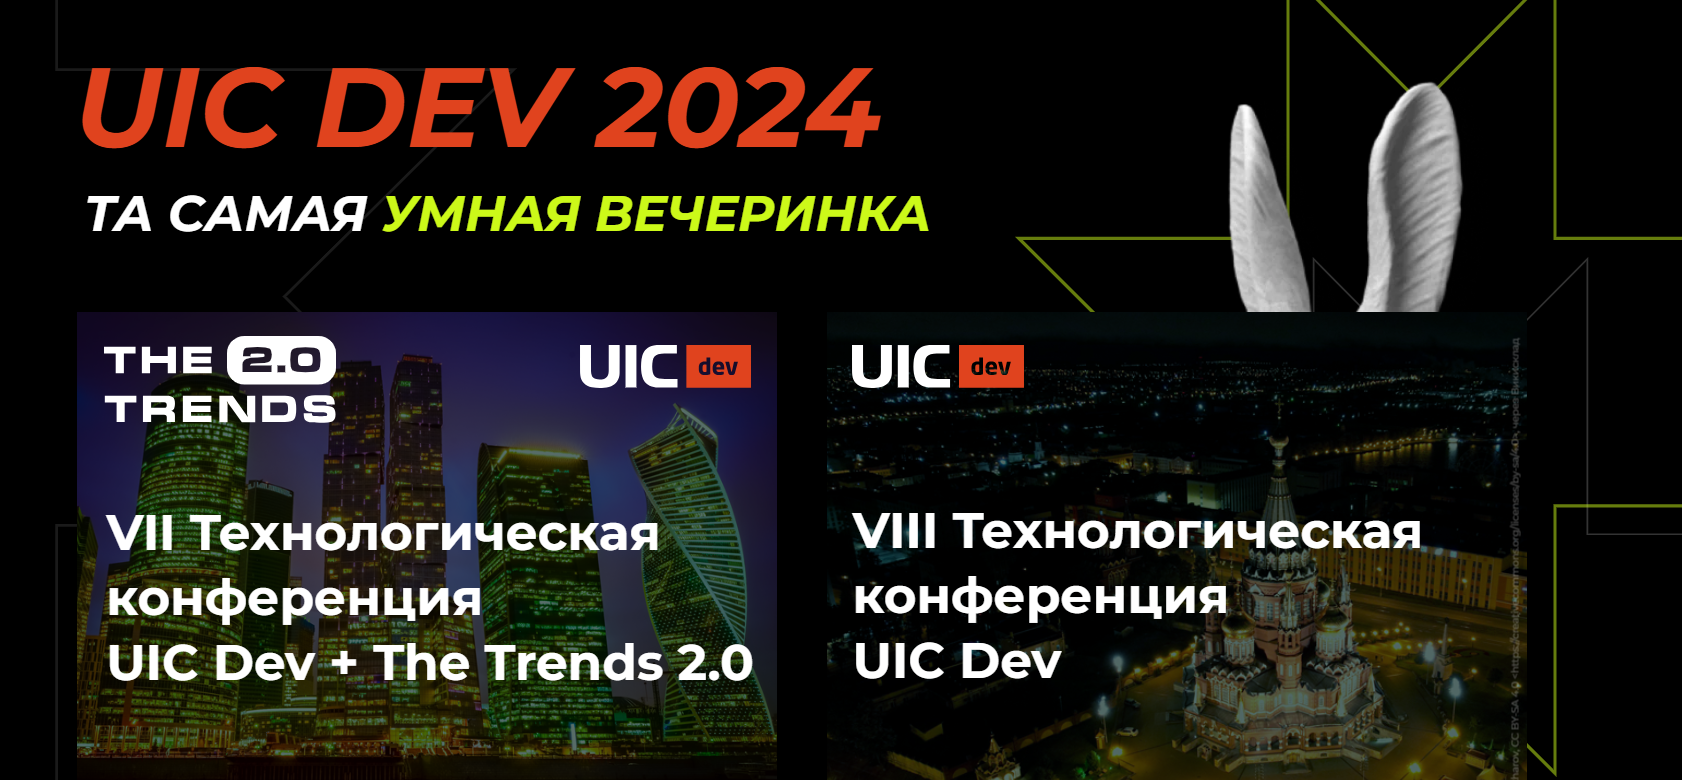 UIC Dev 2024